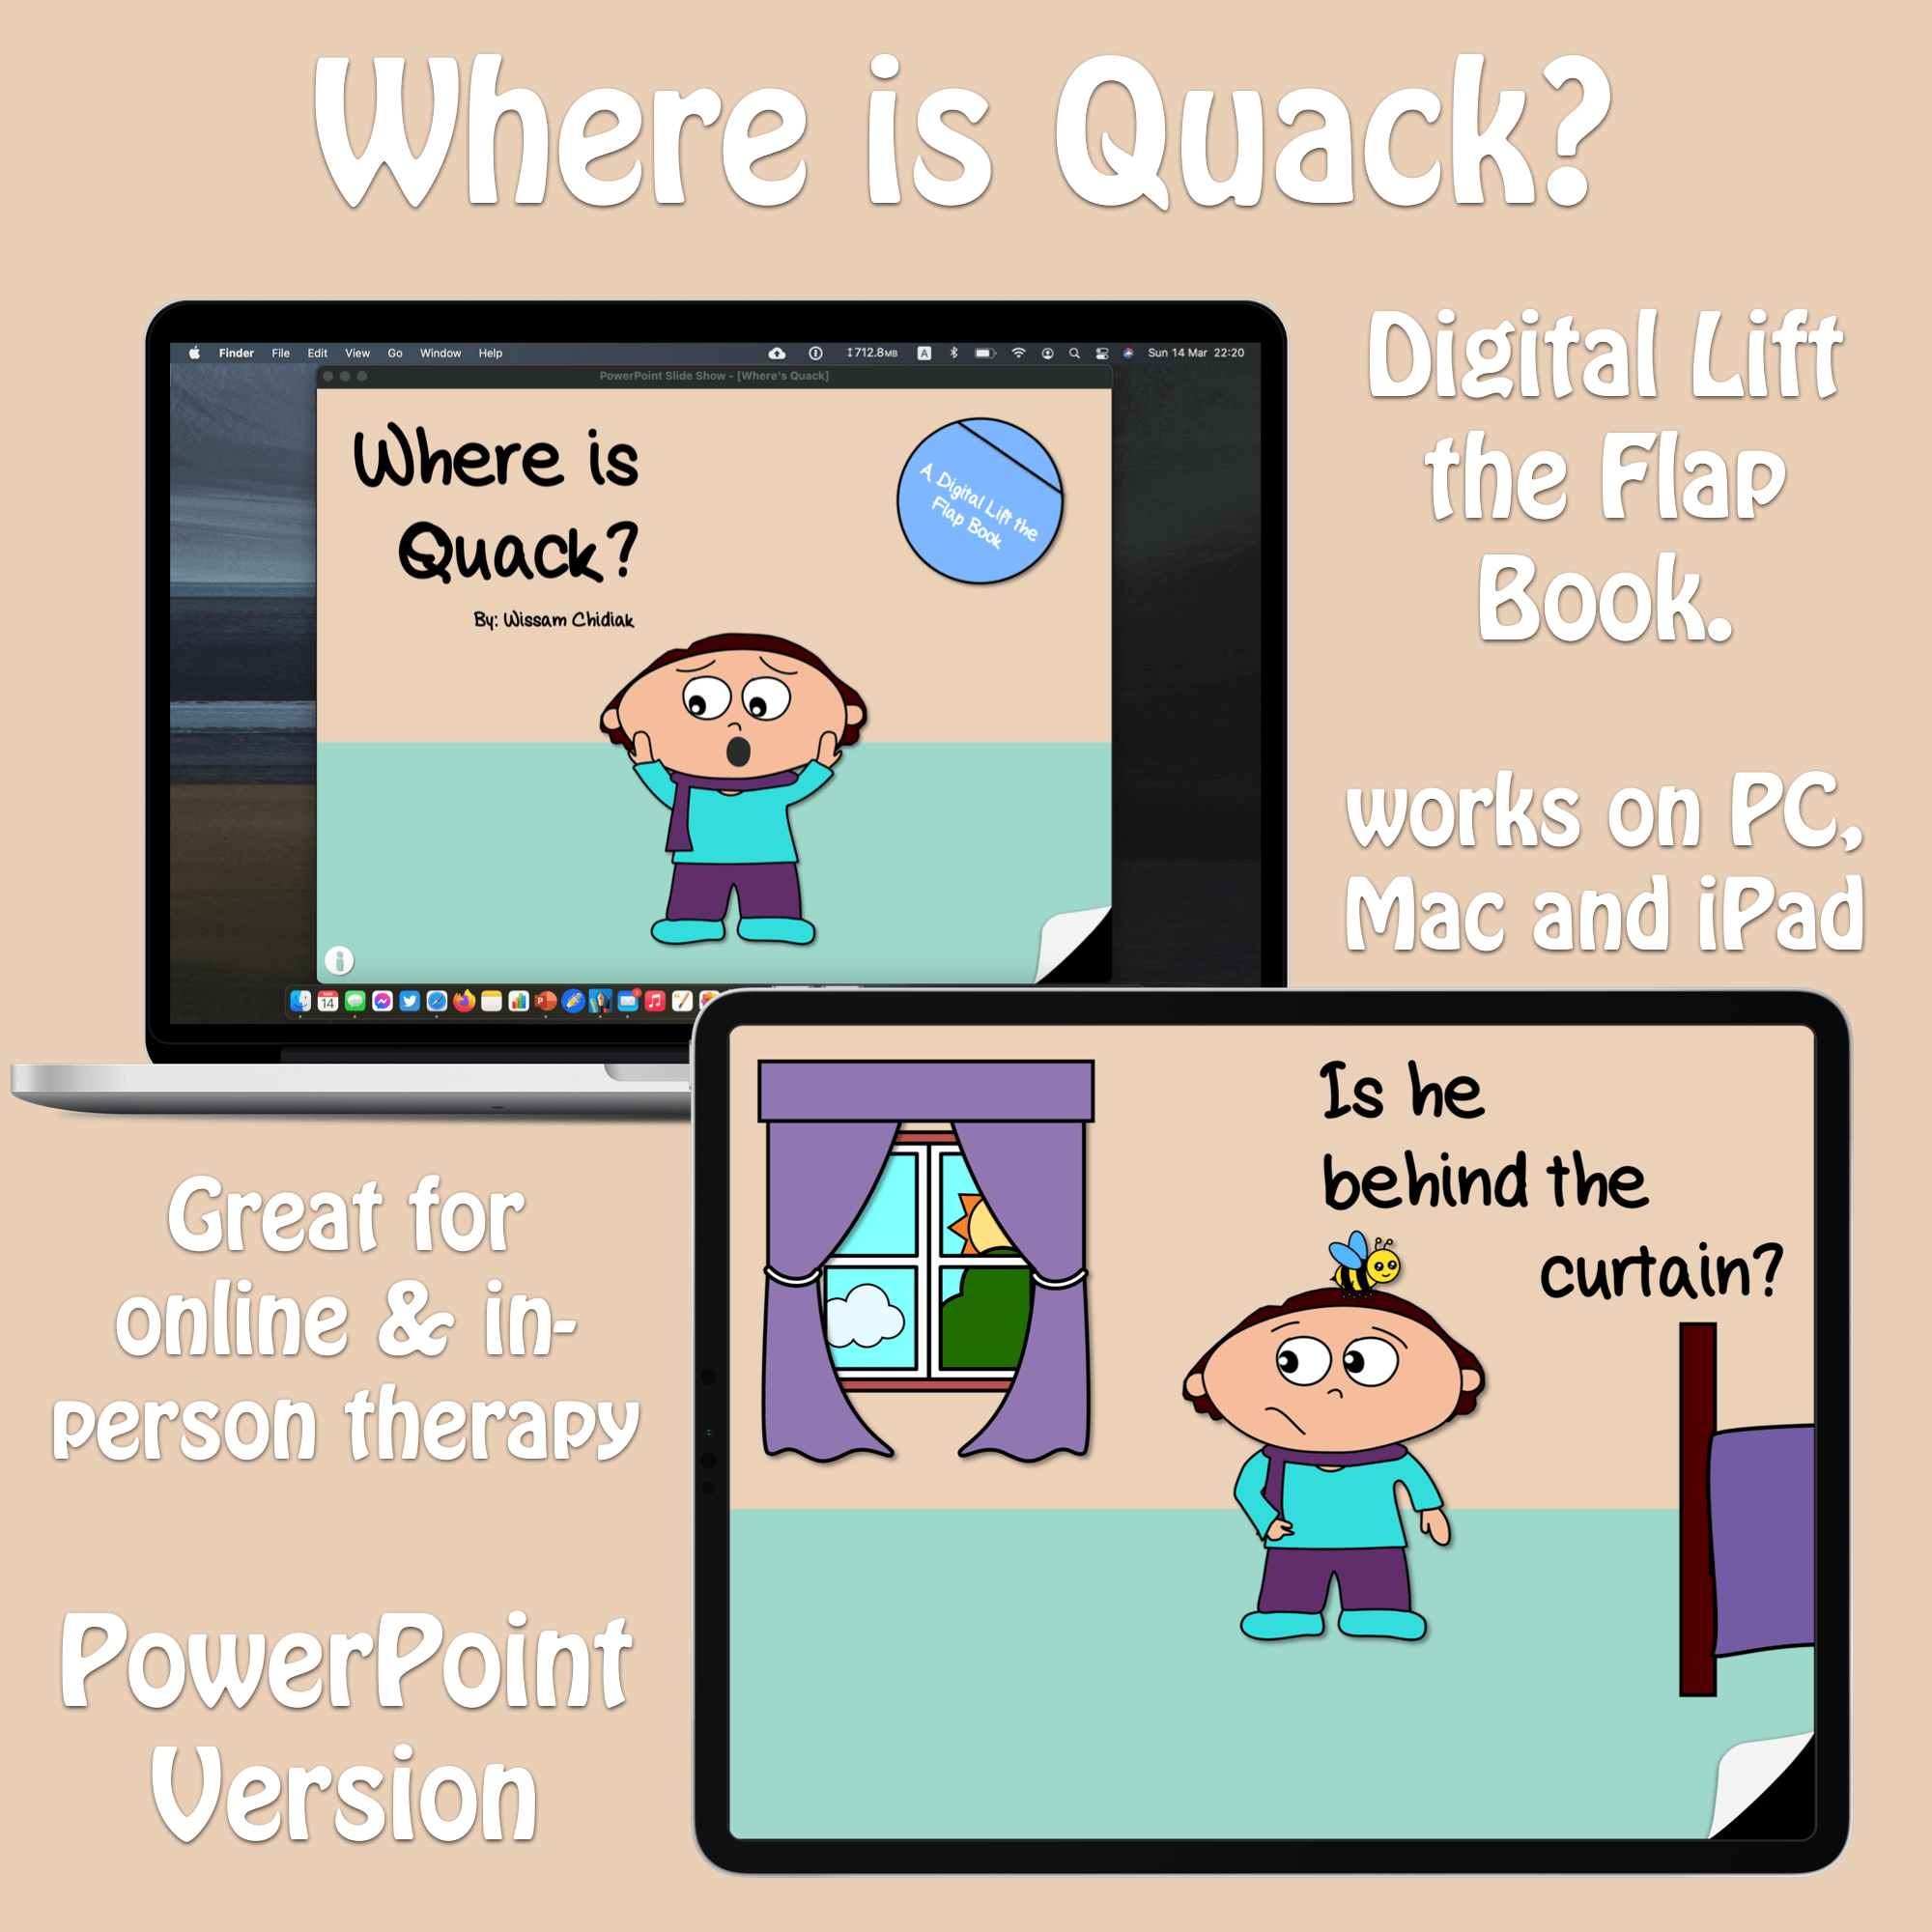 Where is Quack